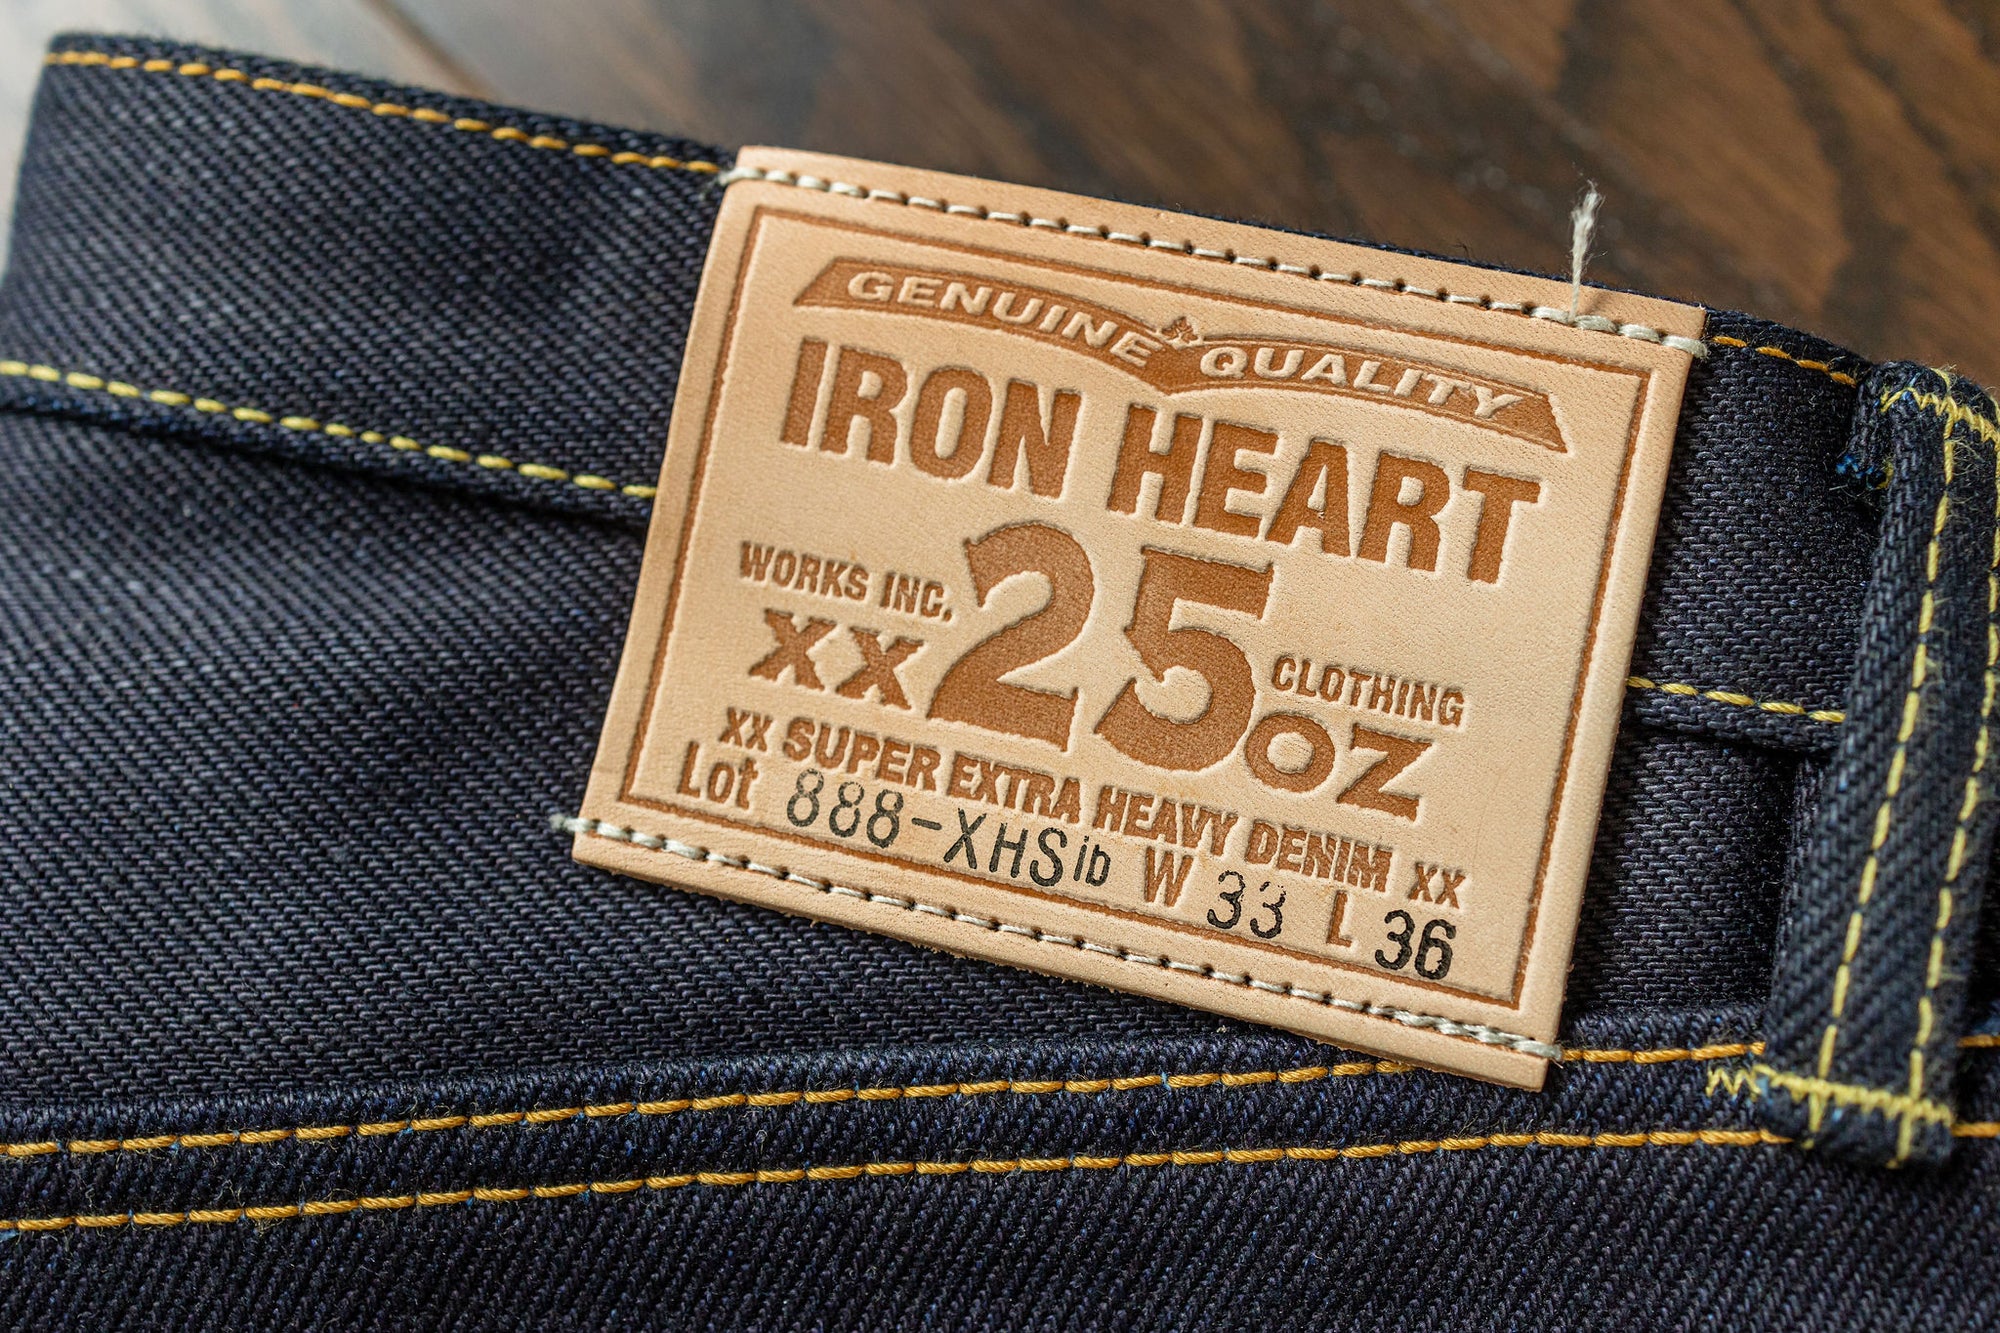 Iron Heart IH-888-XHSib 25oz Selvedge Denim Medium/High Rise Tapered Cut Jeans -  Indigo/Black